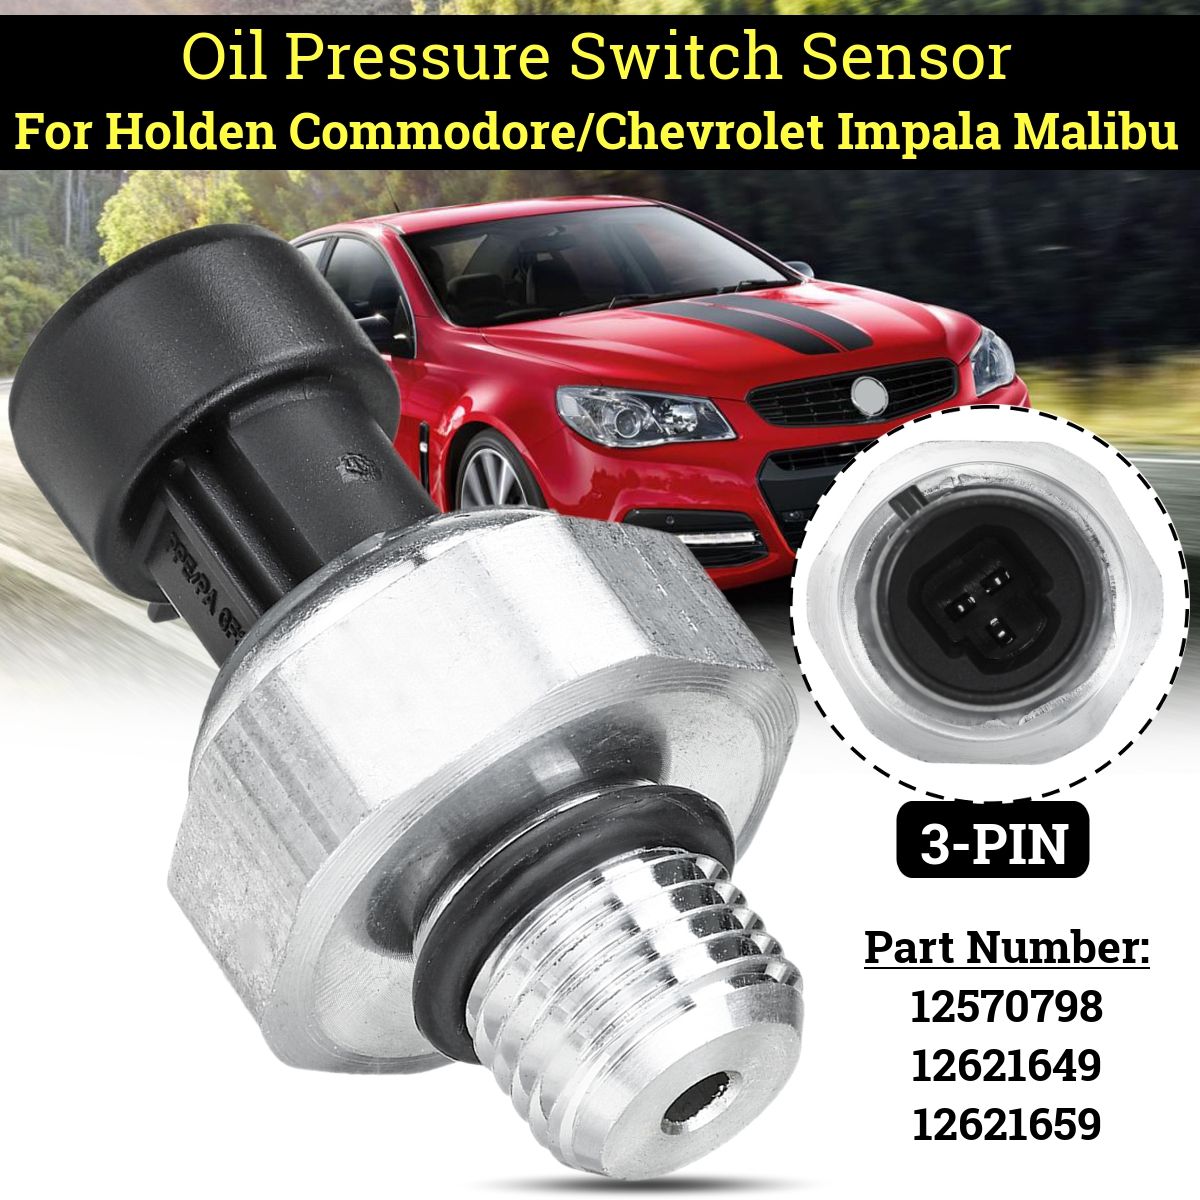 Oil-Pressure-Switch-Sensor-For-Holden-CommodoreChevrolet-Impala-Malibu-1671377